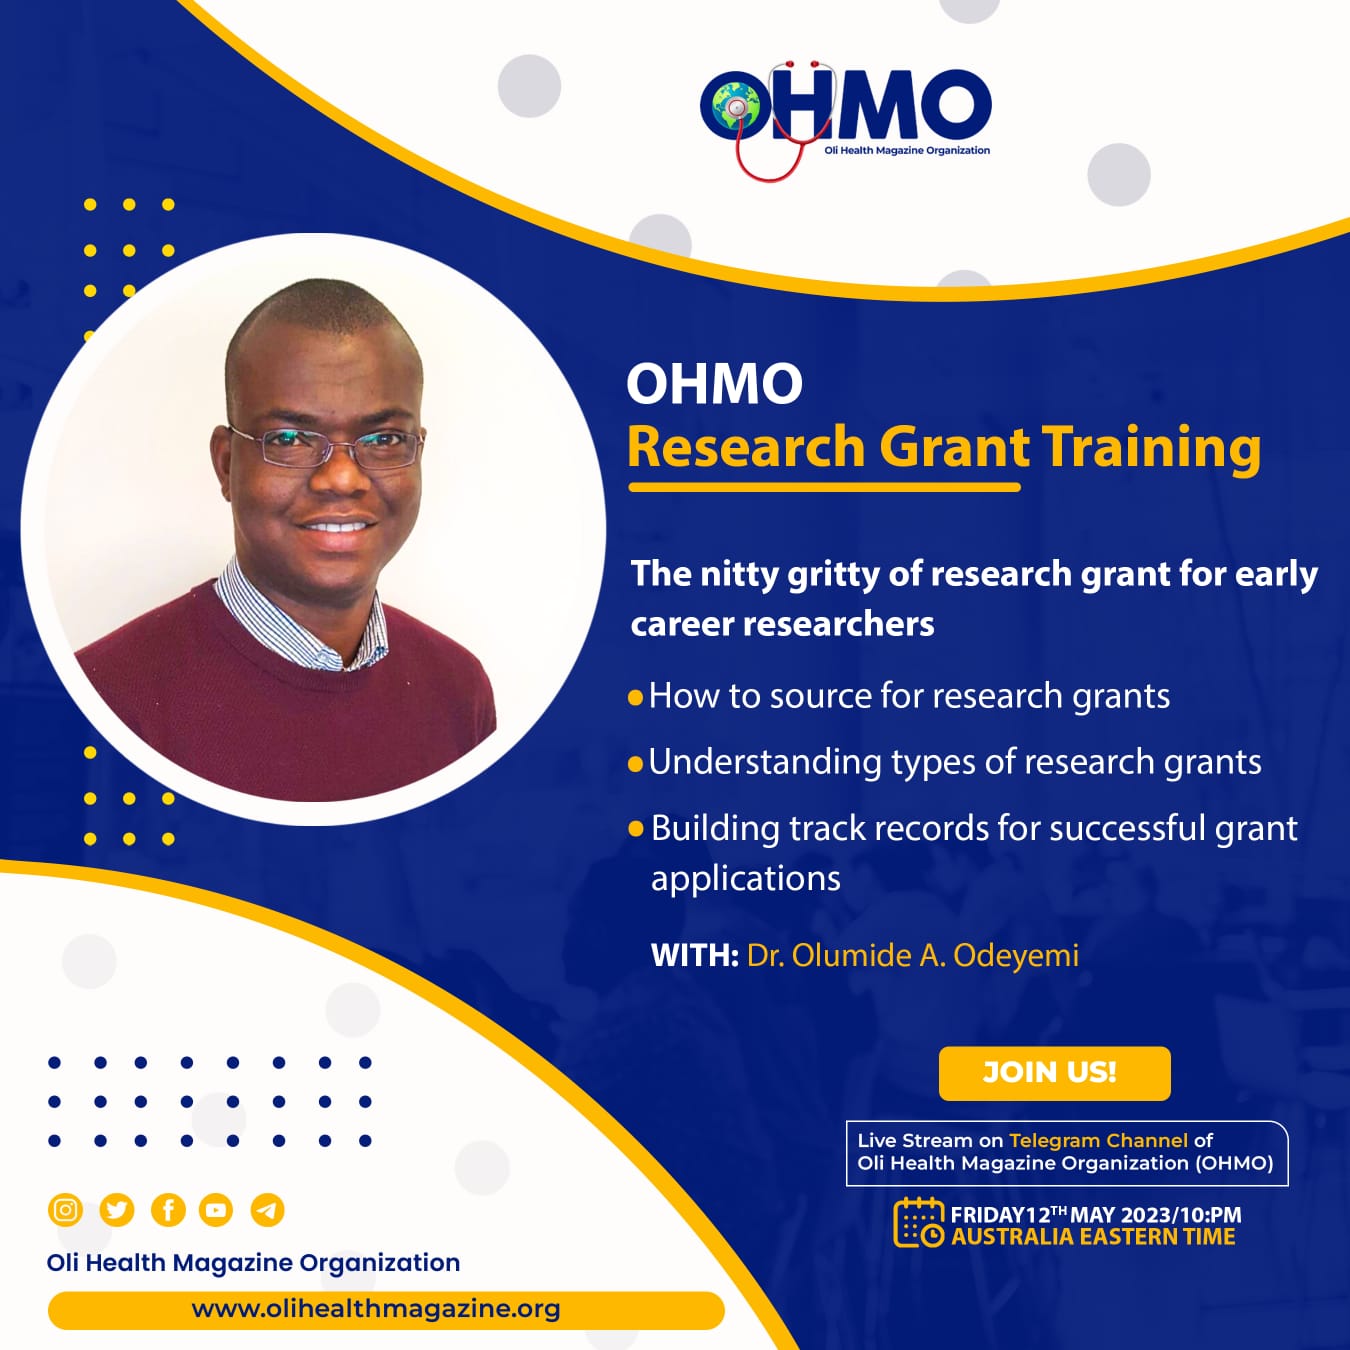 Research Grant Training at Oli Health Magazine Organization (OHMO)